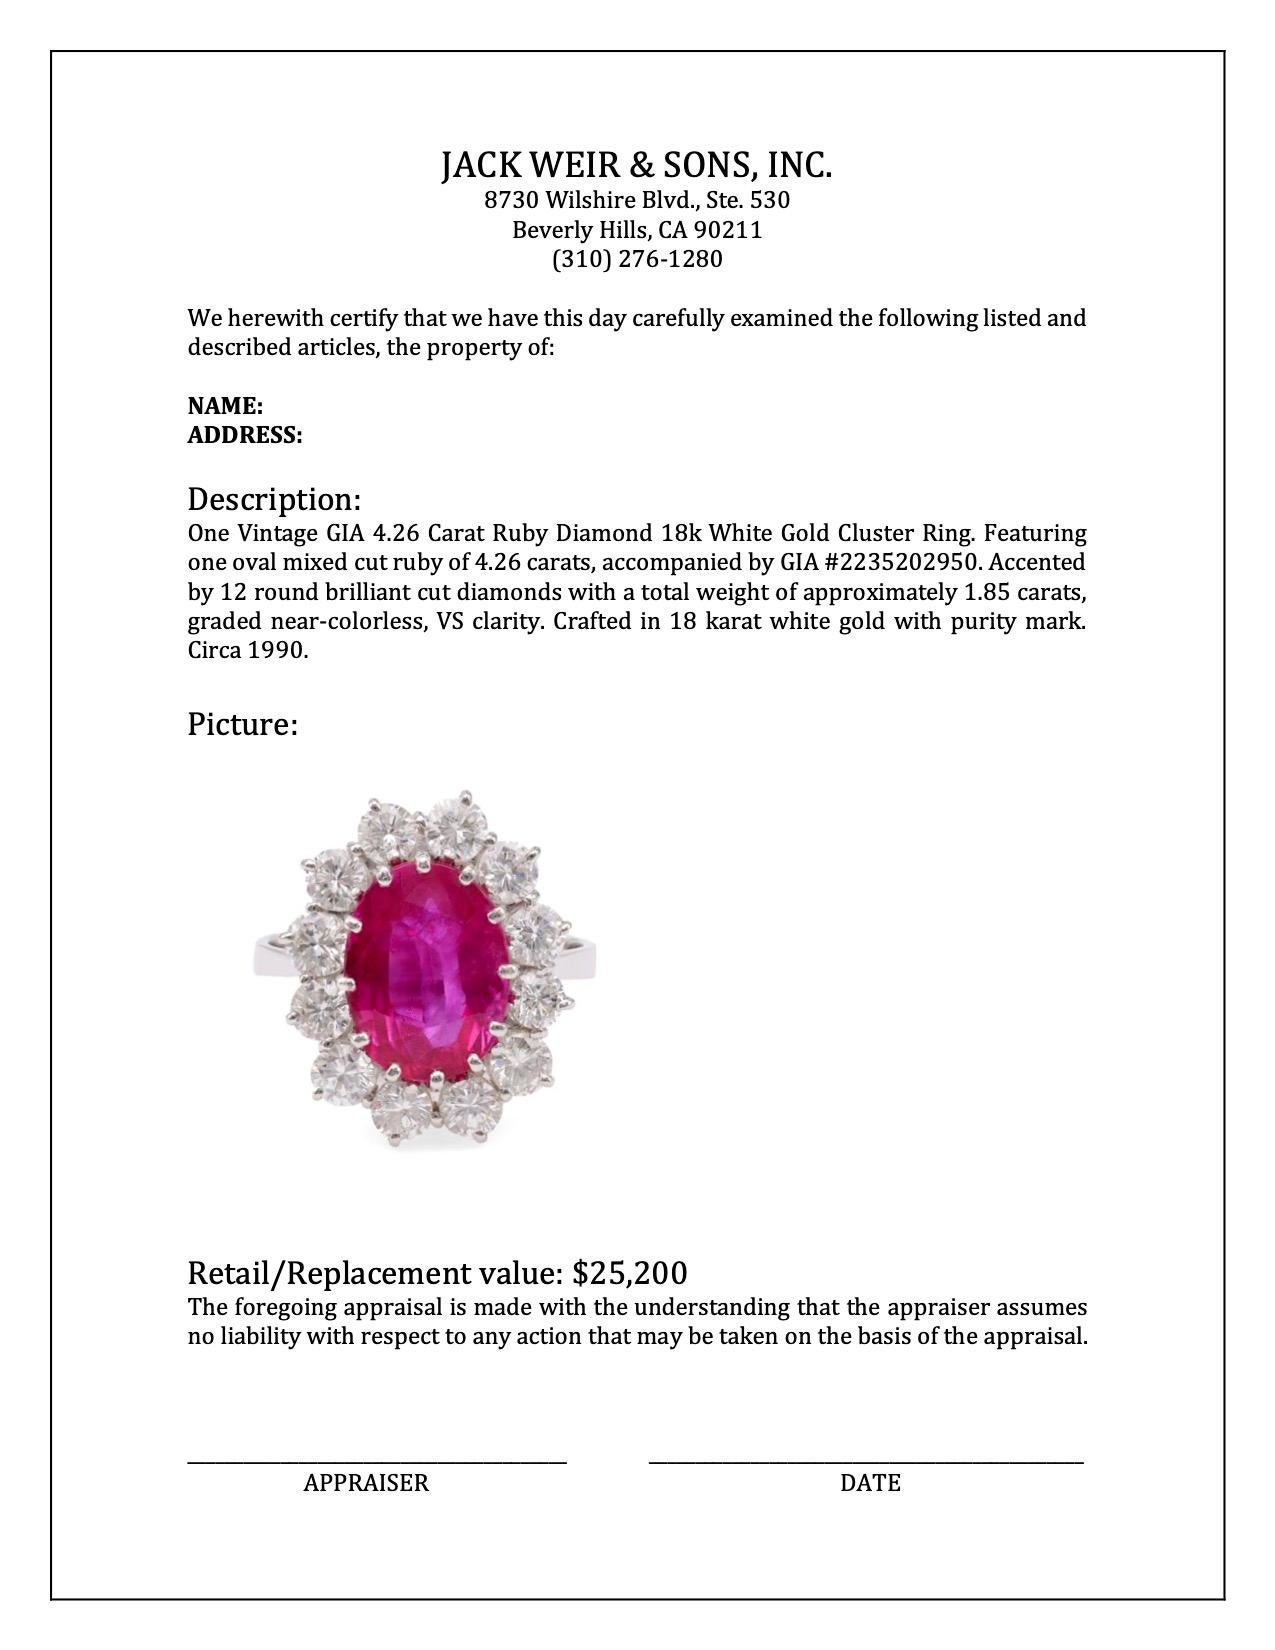 Vintage GIA 4.26 Carat Ruby Diamond 18k White Gold Cluster Ring For Sale 2